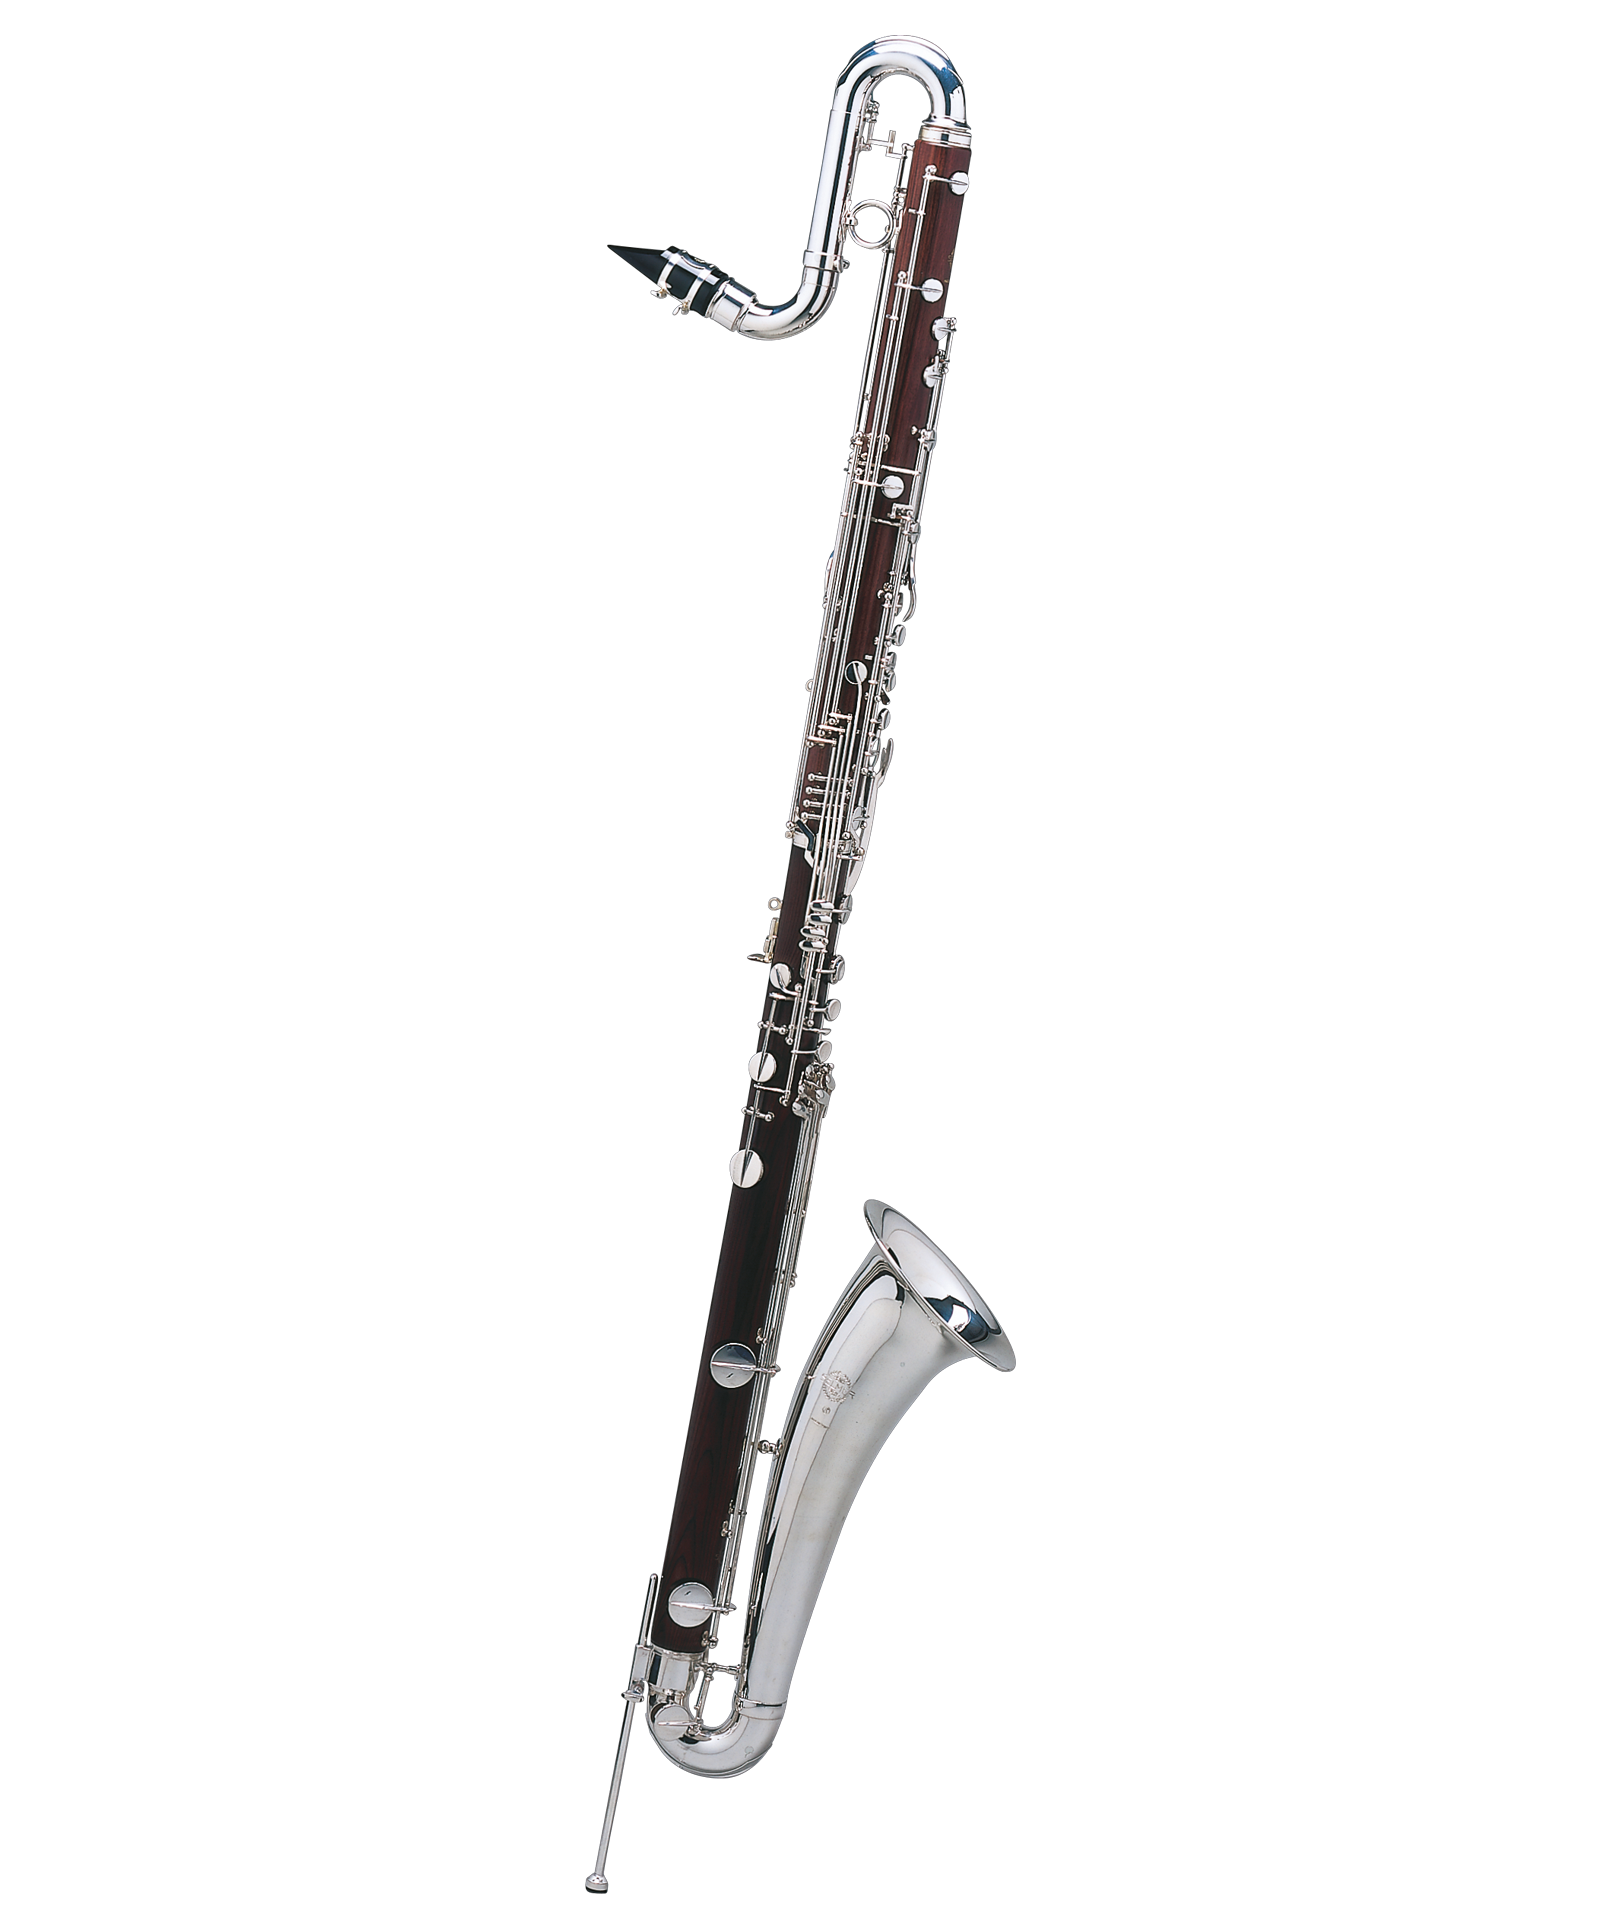 History of the clarinet – Henri SELMER Paris